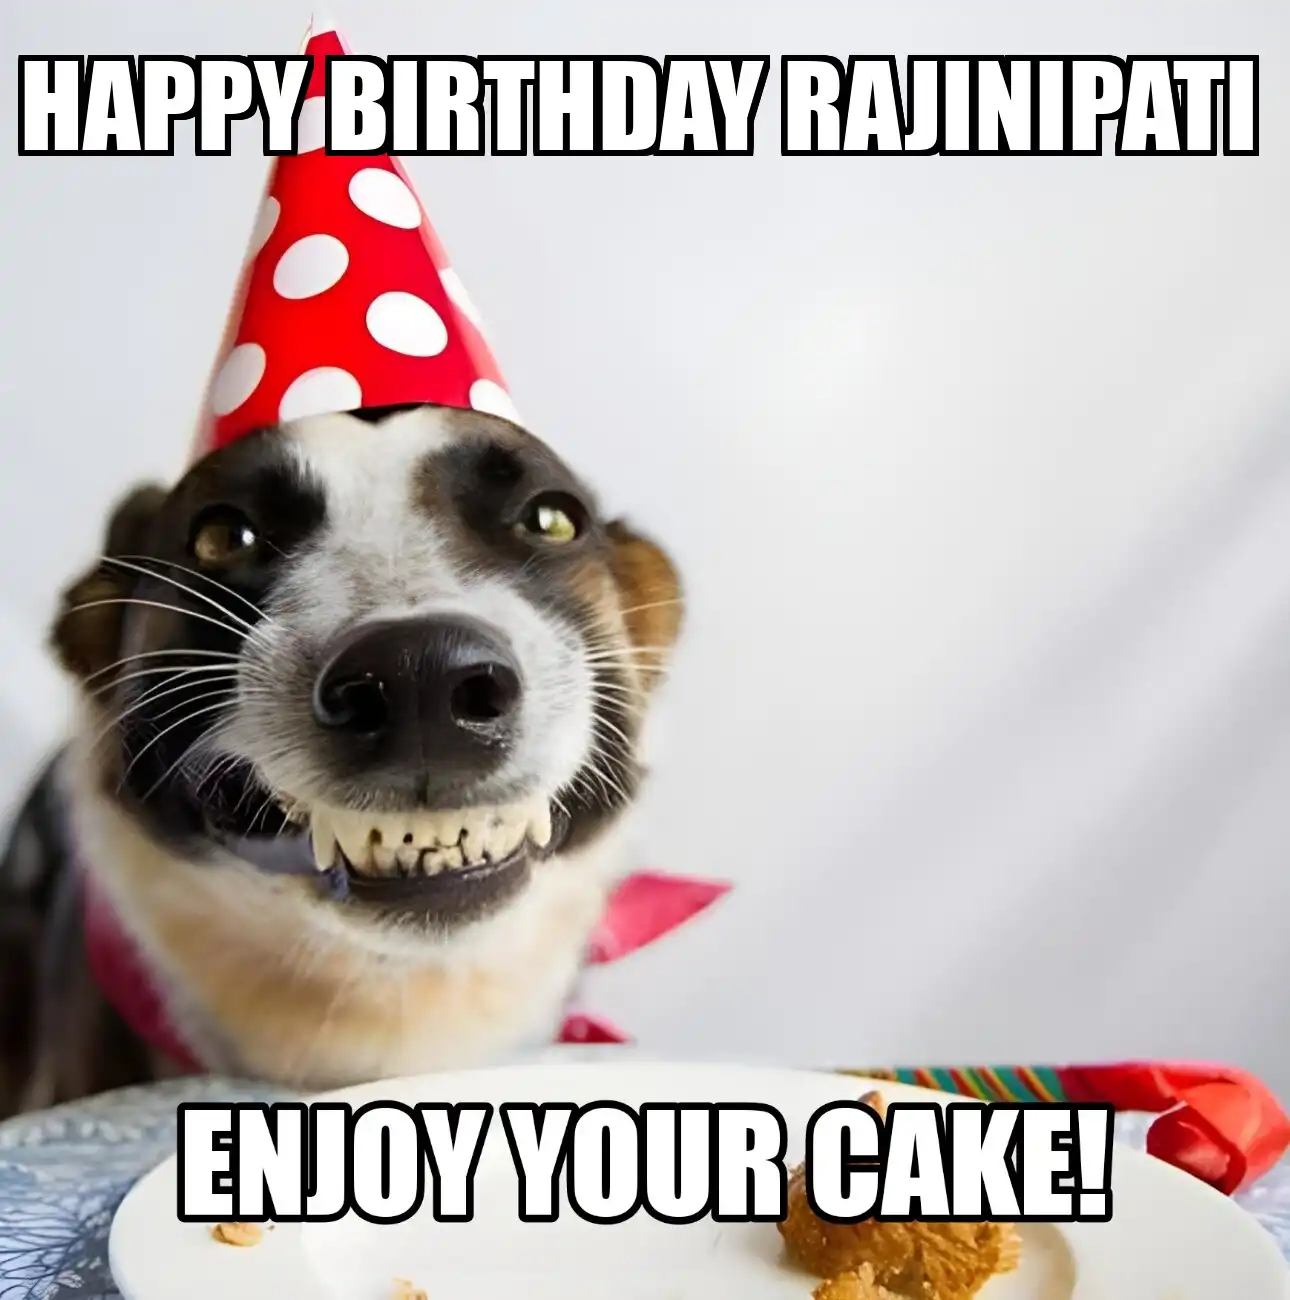 Happy Birthday Rajinipati Enjoy Your Cake Dog Meme